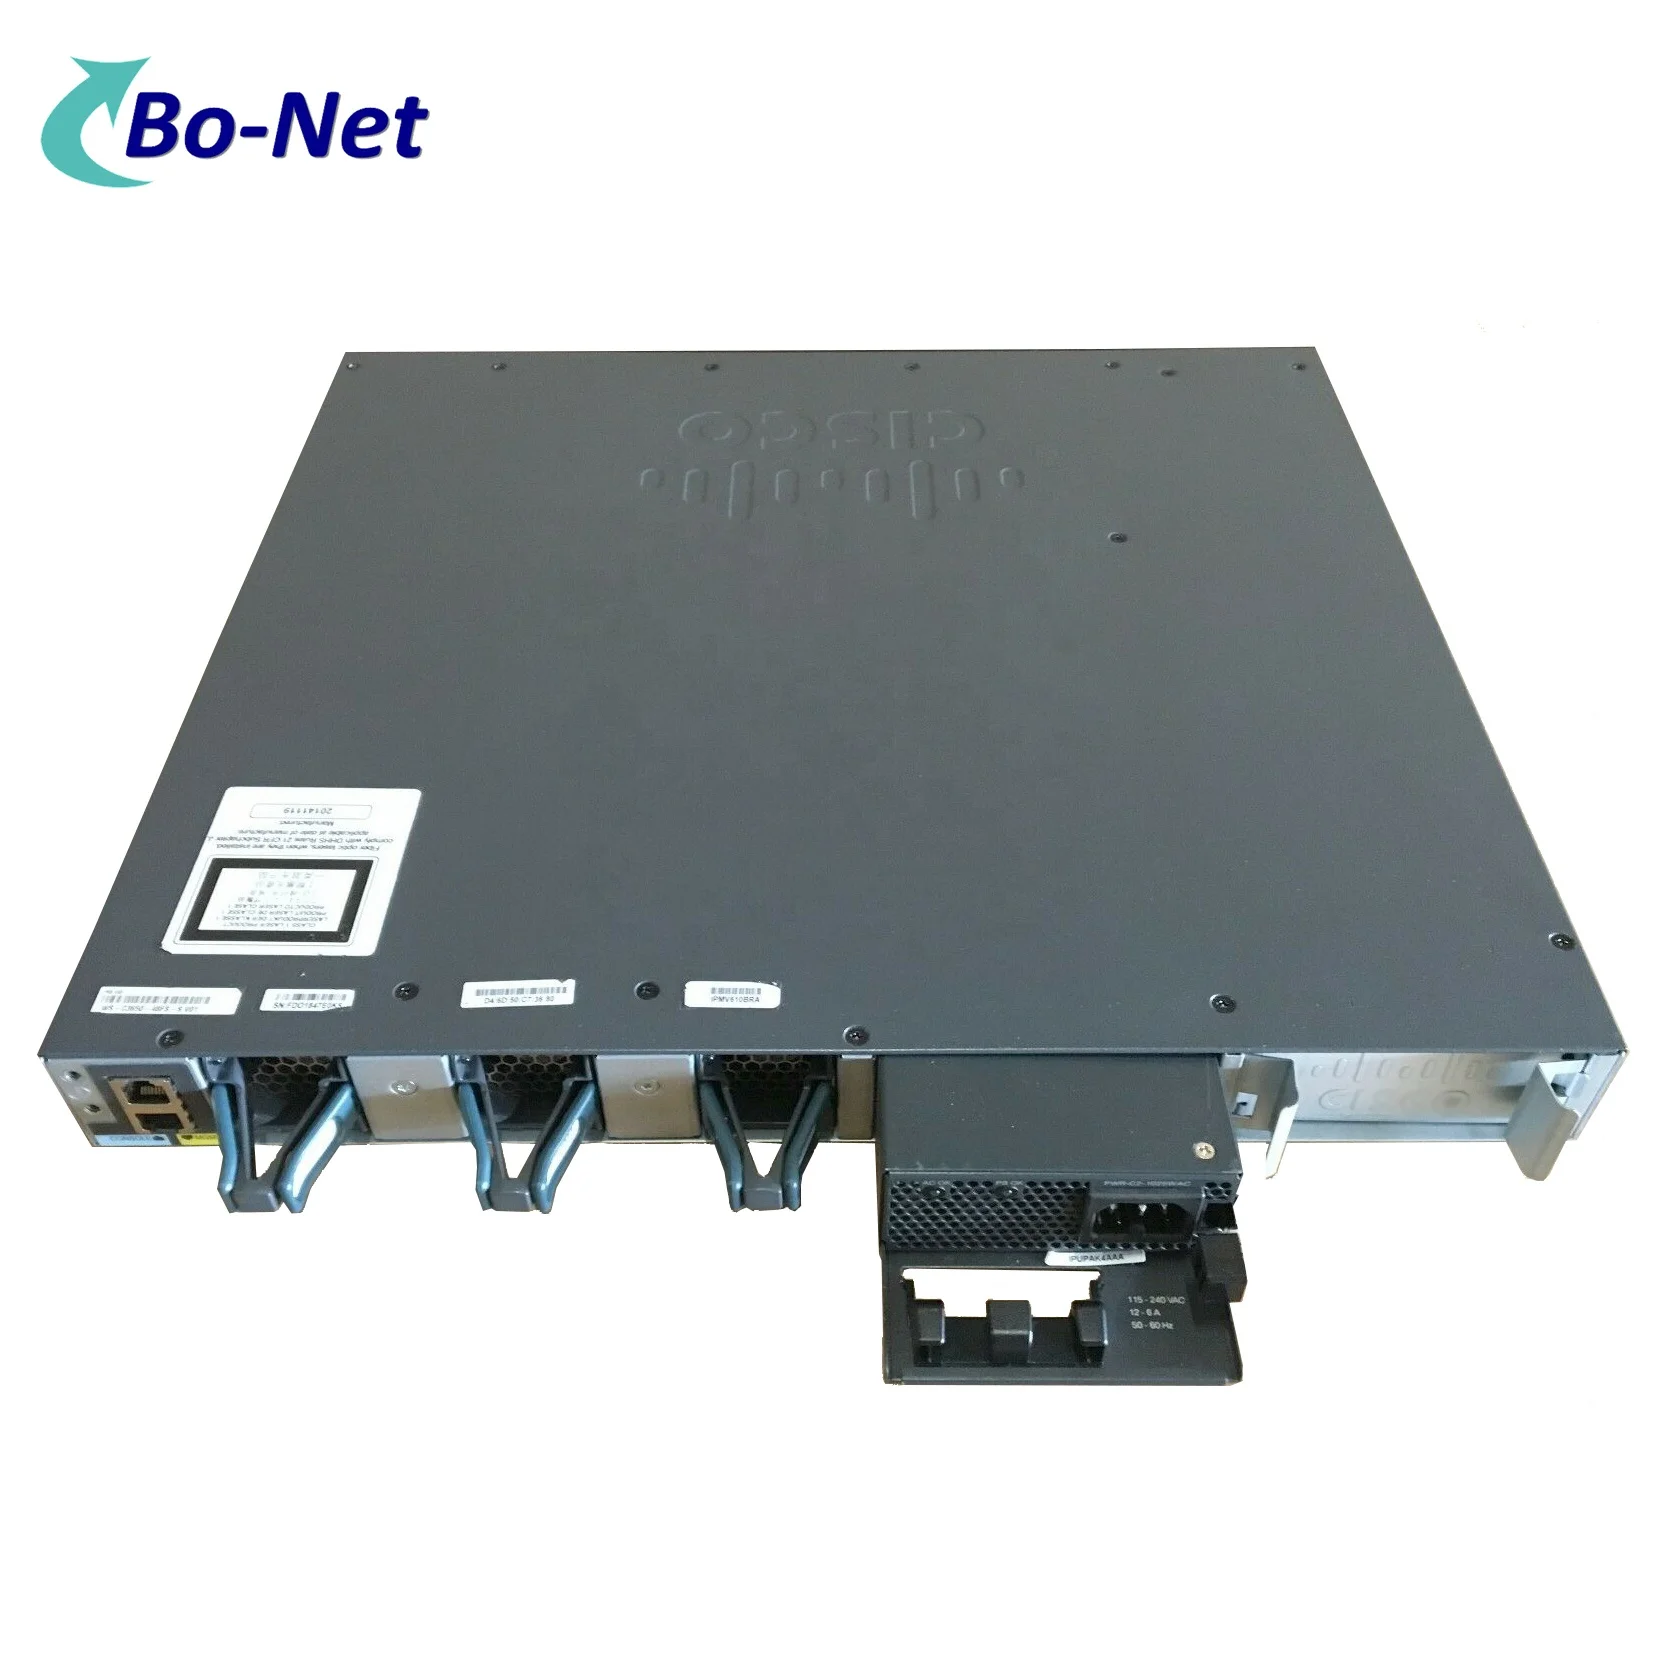 WS-C3650-48FS-S 48port 10/100/1000M managed network switch C3650 series